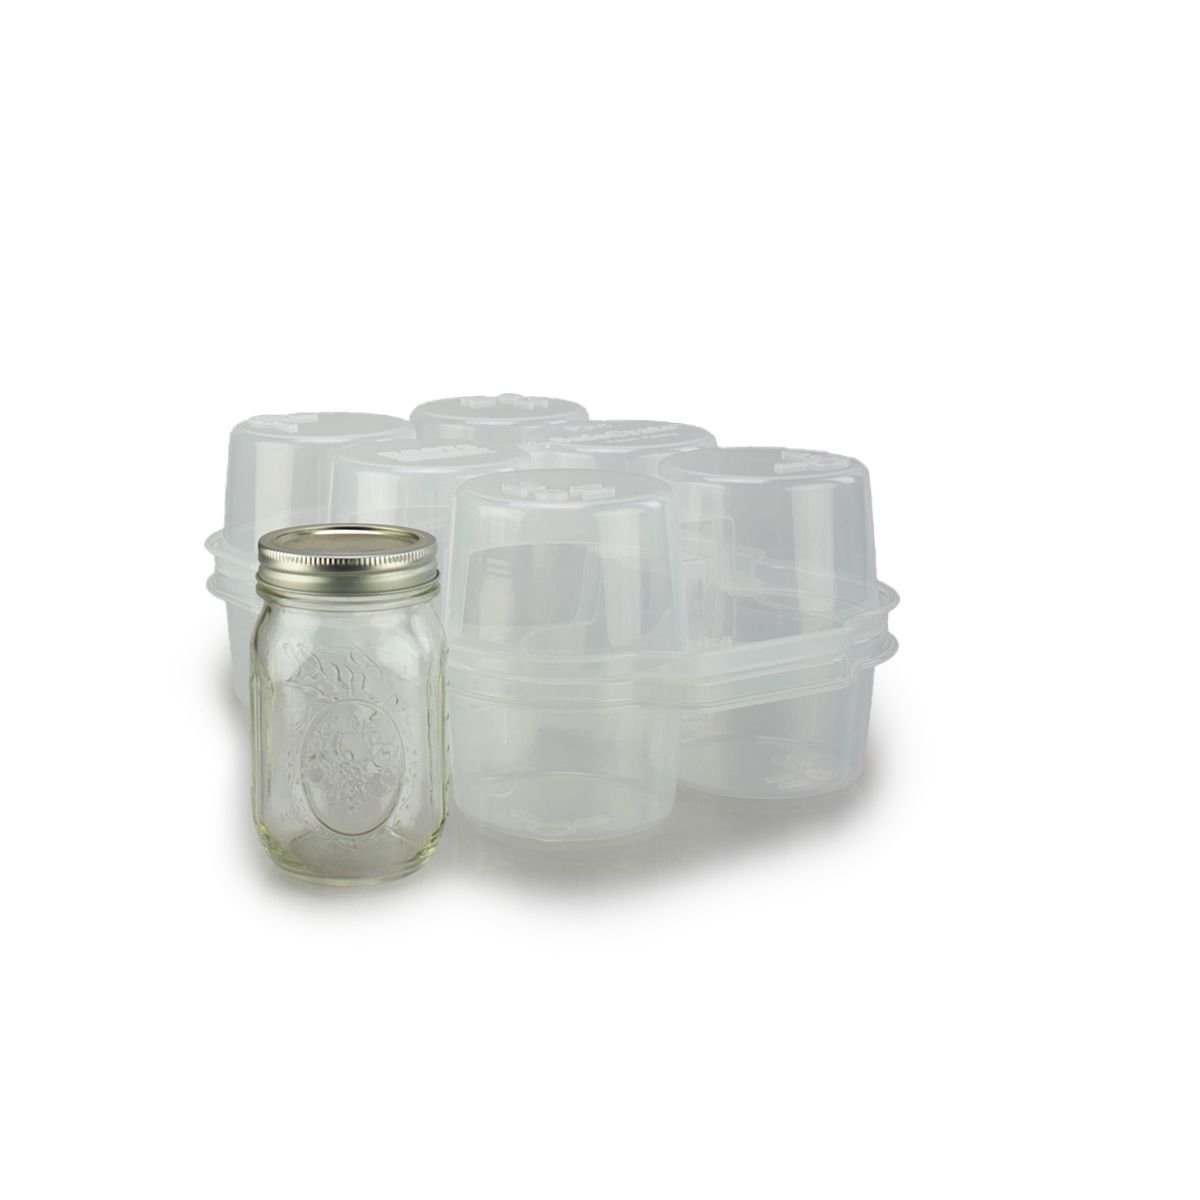 24 Oz Glass Drinking Mason Jar Mugs - Cold Beverage Drinking Glasses -  Kitchen Storage Jars - China Glass Mason Jar Mugs and Mason Jar Mugs price